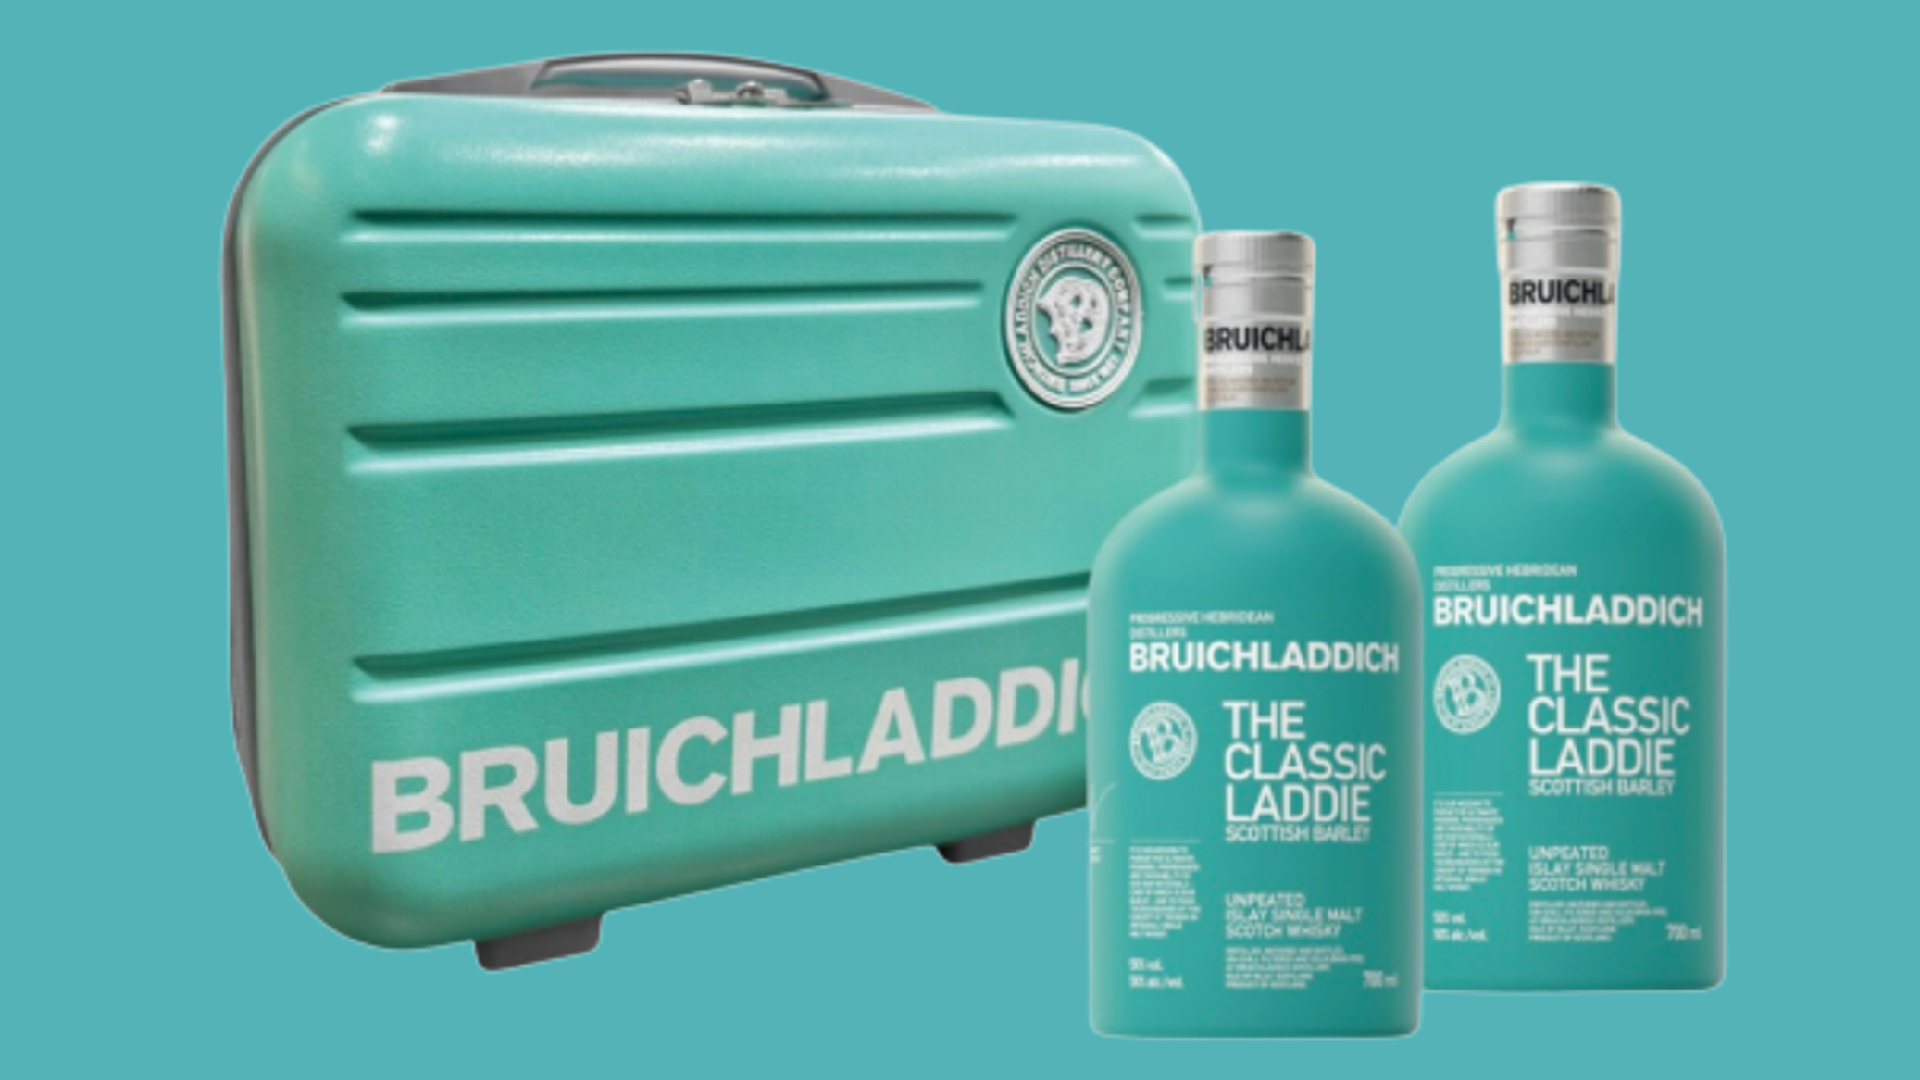 Bruichladdich suitcase